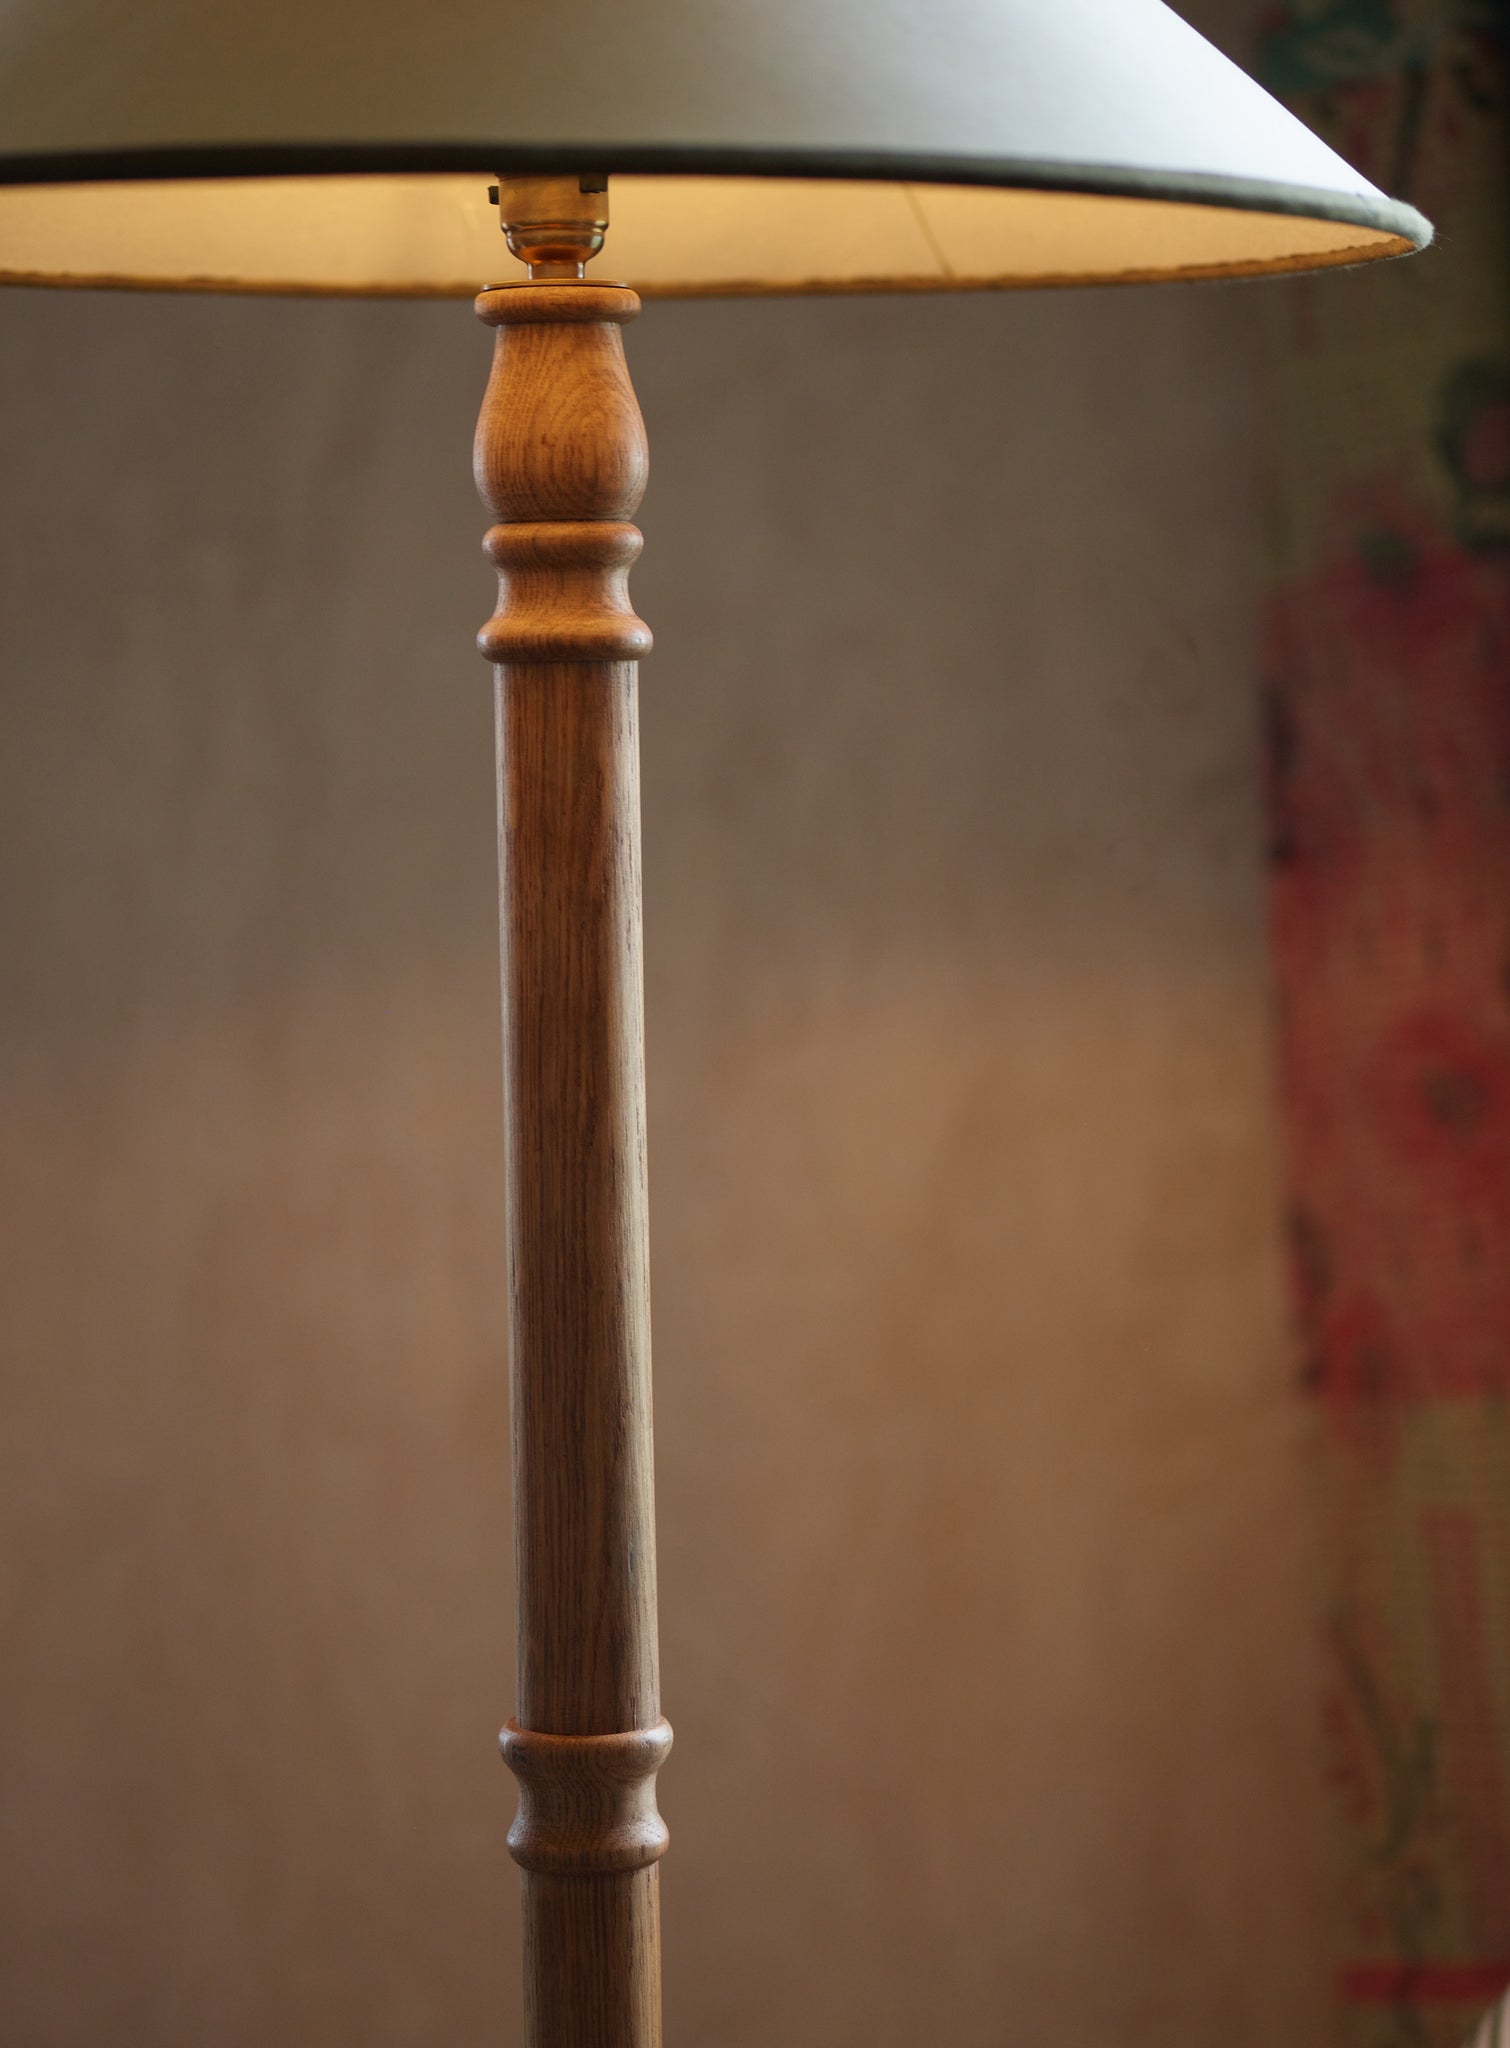 Edwin Oak Floor Lamp, Light Oiled